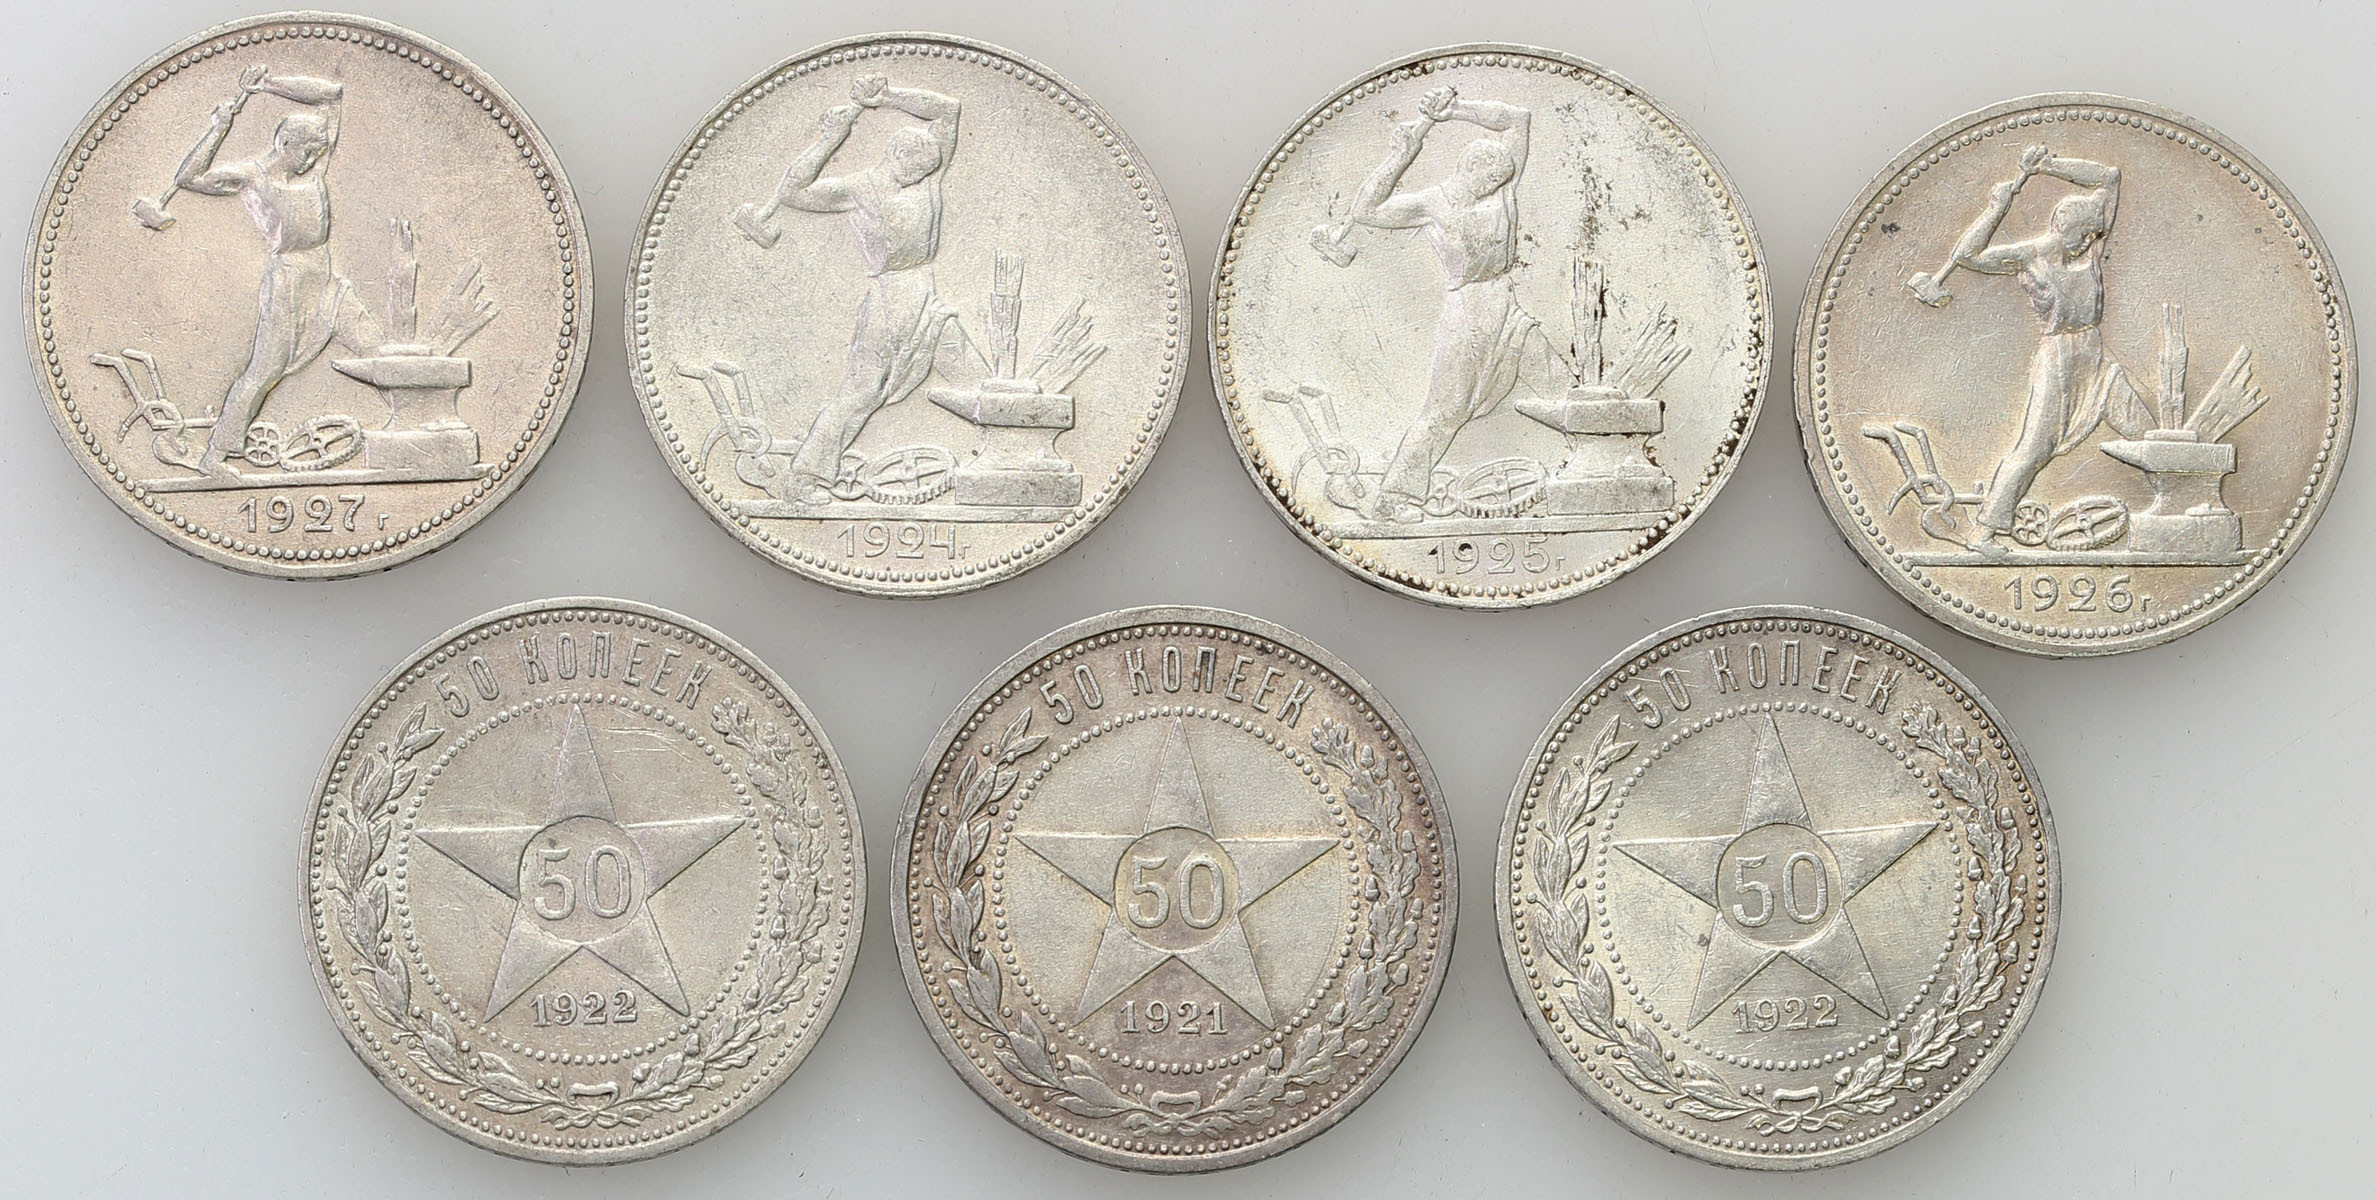 Rosja, ZSSR. Połtinnik (50 kopiejek) 1921-1927, zestaw 7 monet